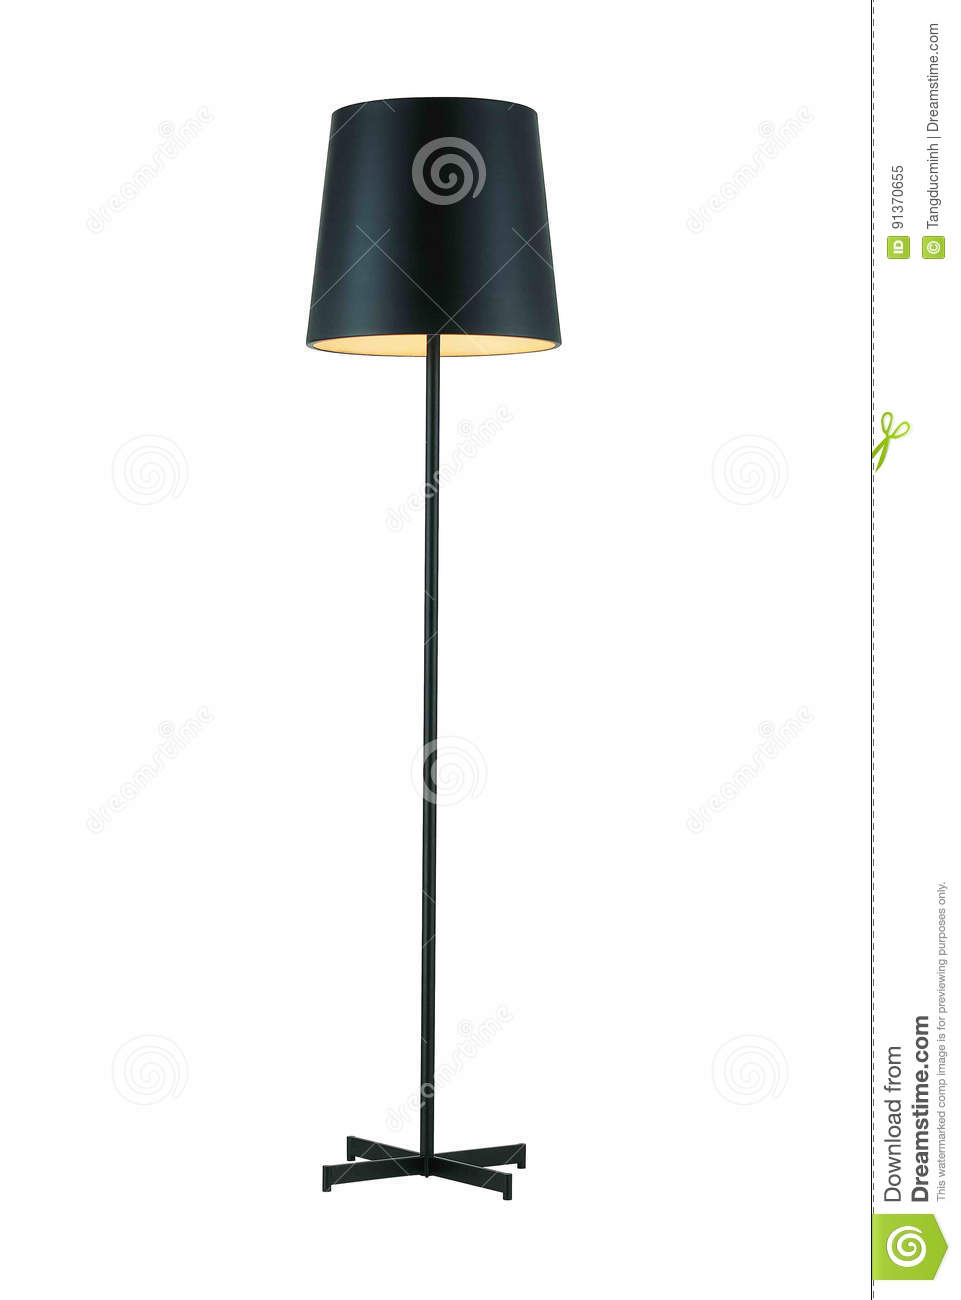 Black Tall Floor Lamp Stock Image Image Of Floor Black pertaining to measurements 961 X 1300